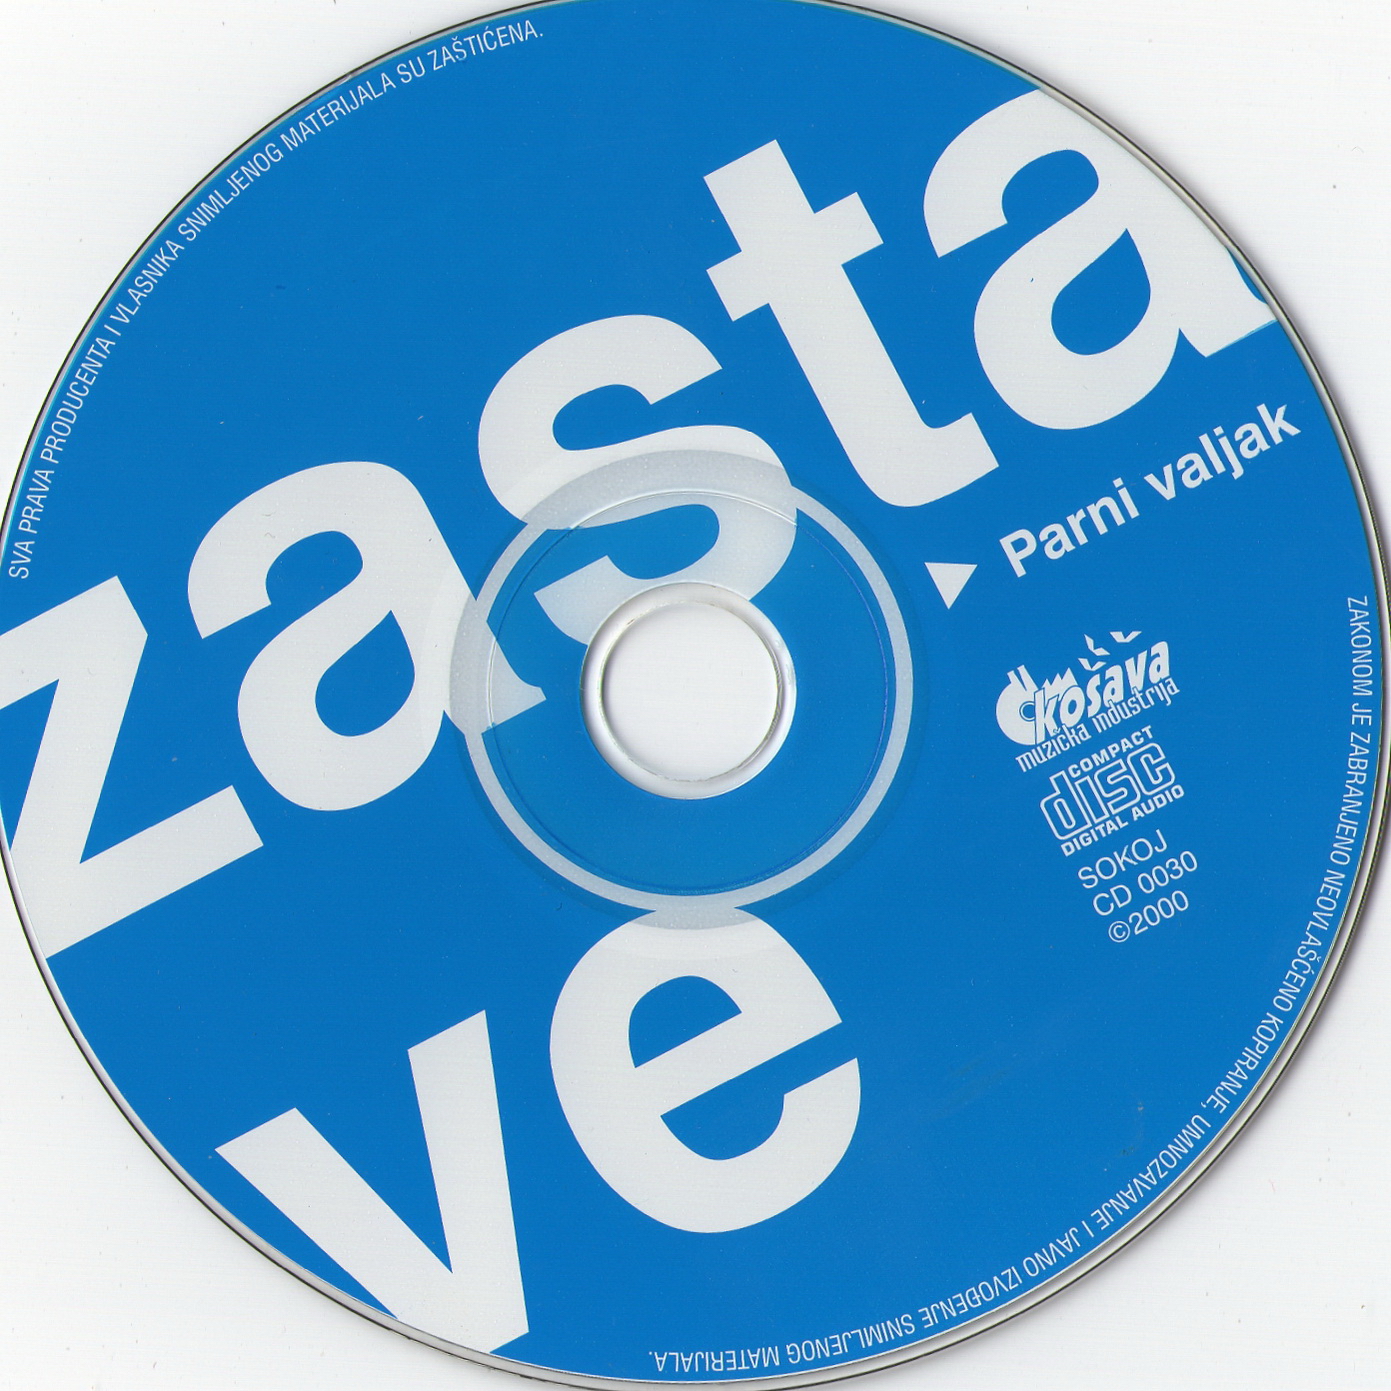 Parni valjak 2000 Zastave cd